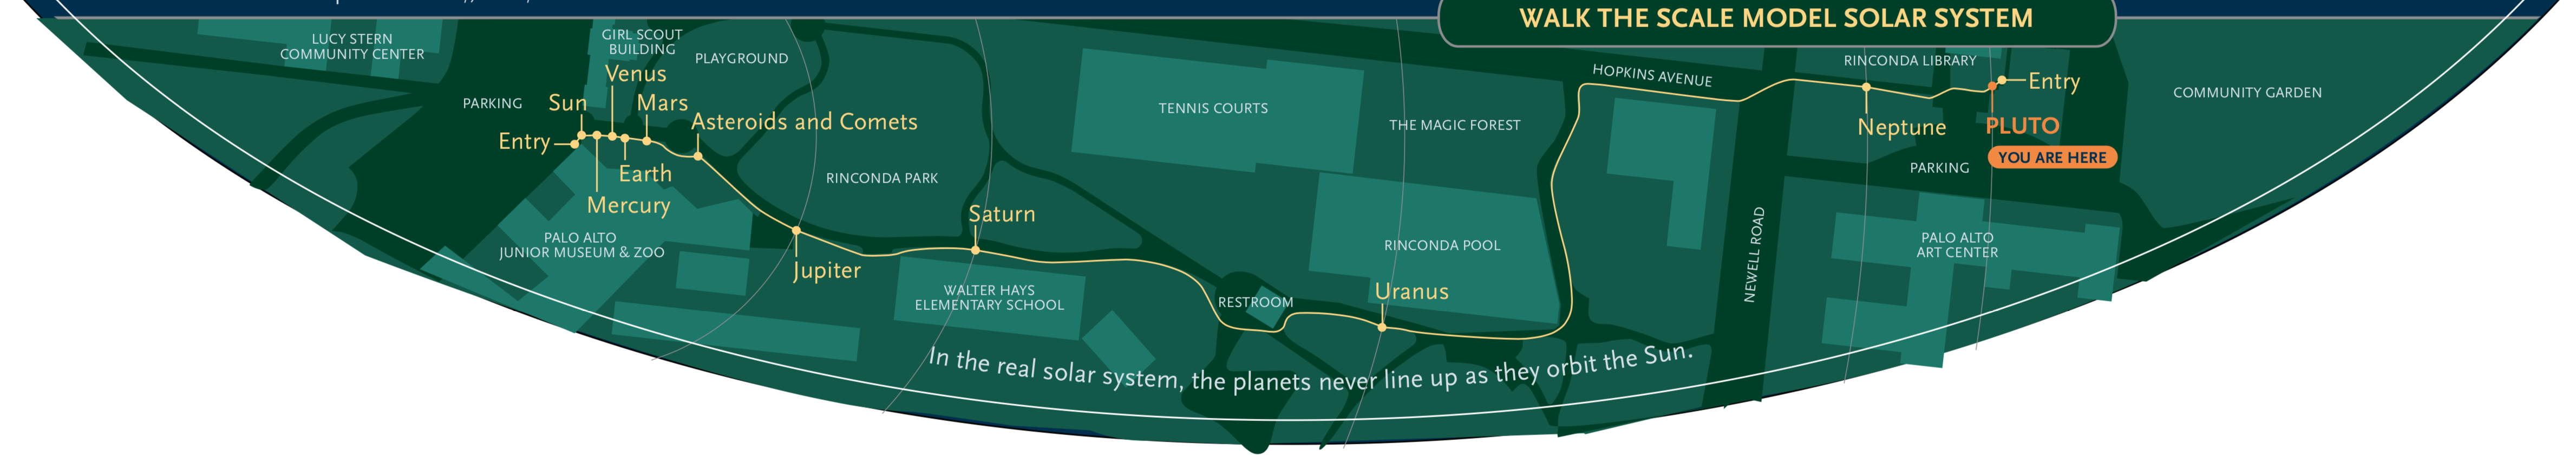 Custom Site Map of Palo Alto's Voyage Solar System Exhibit